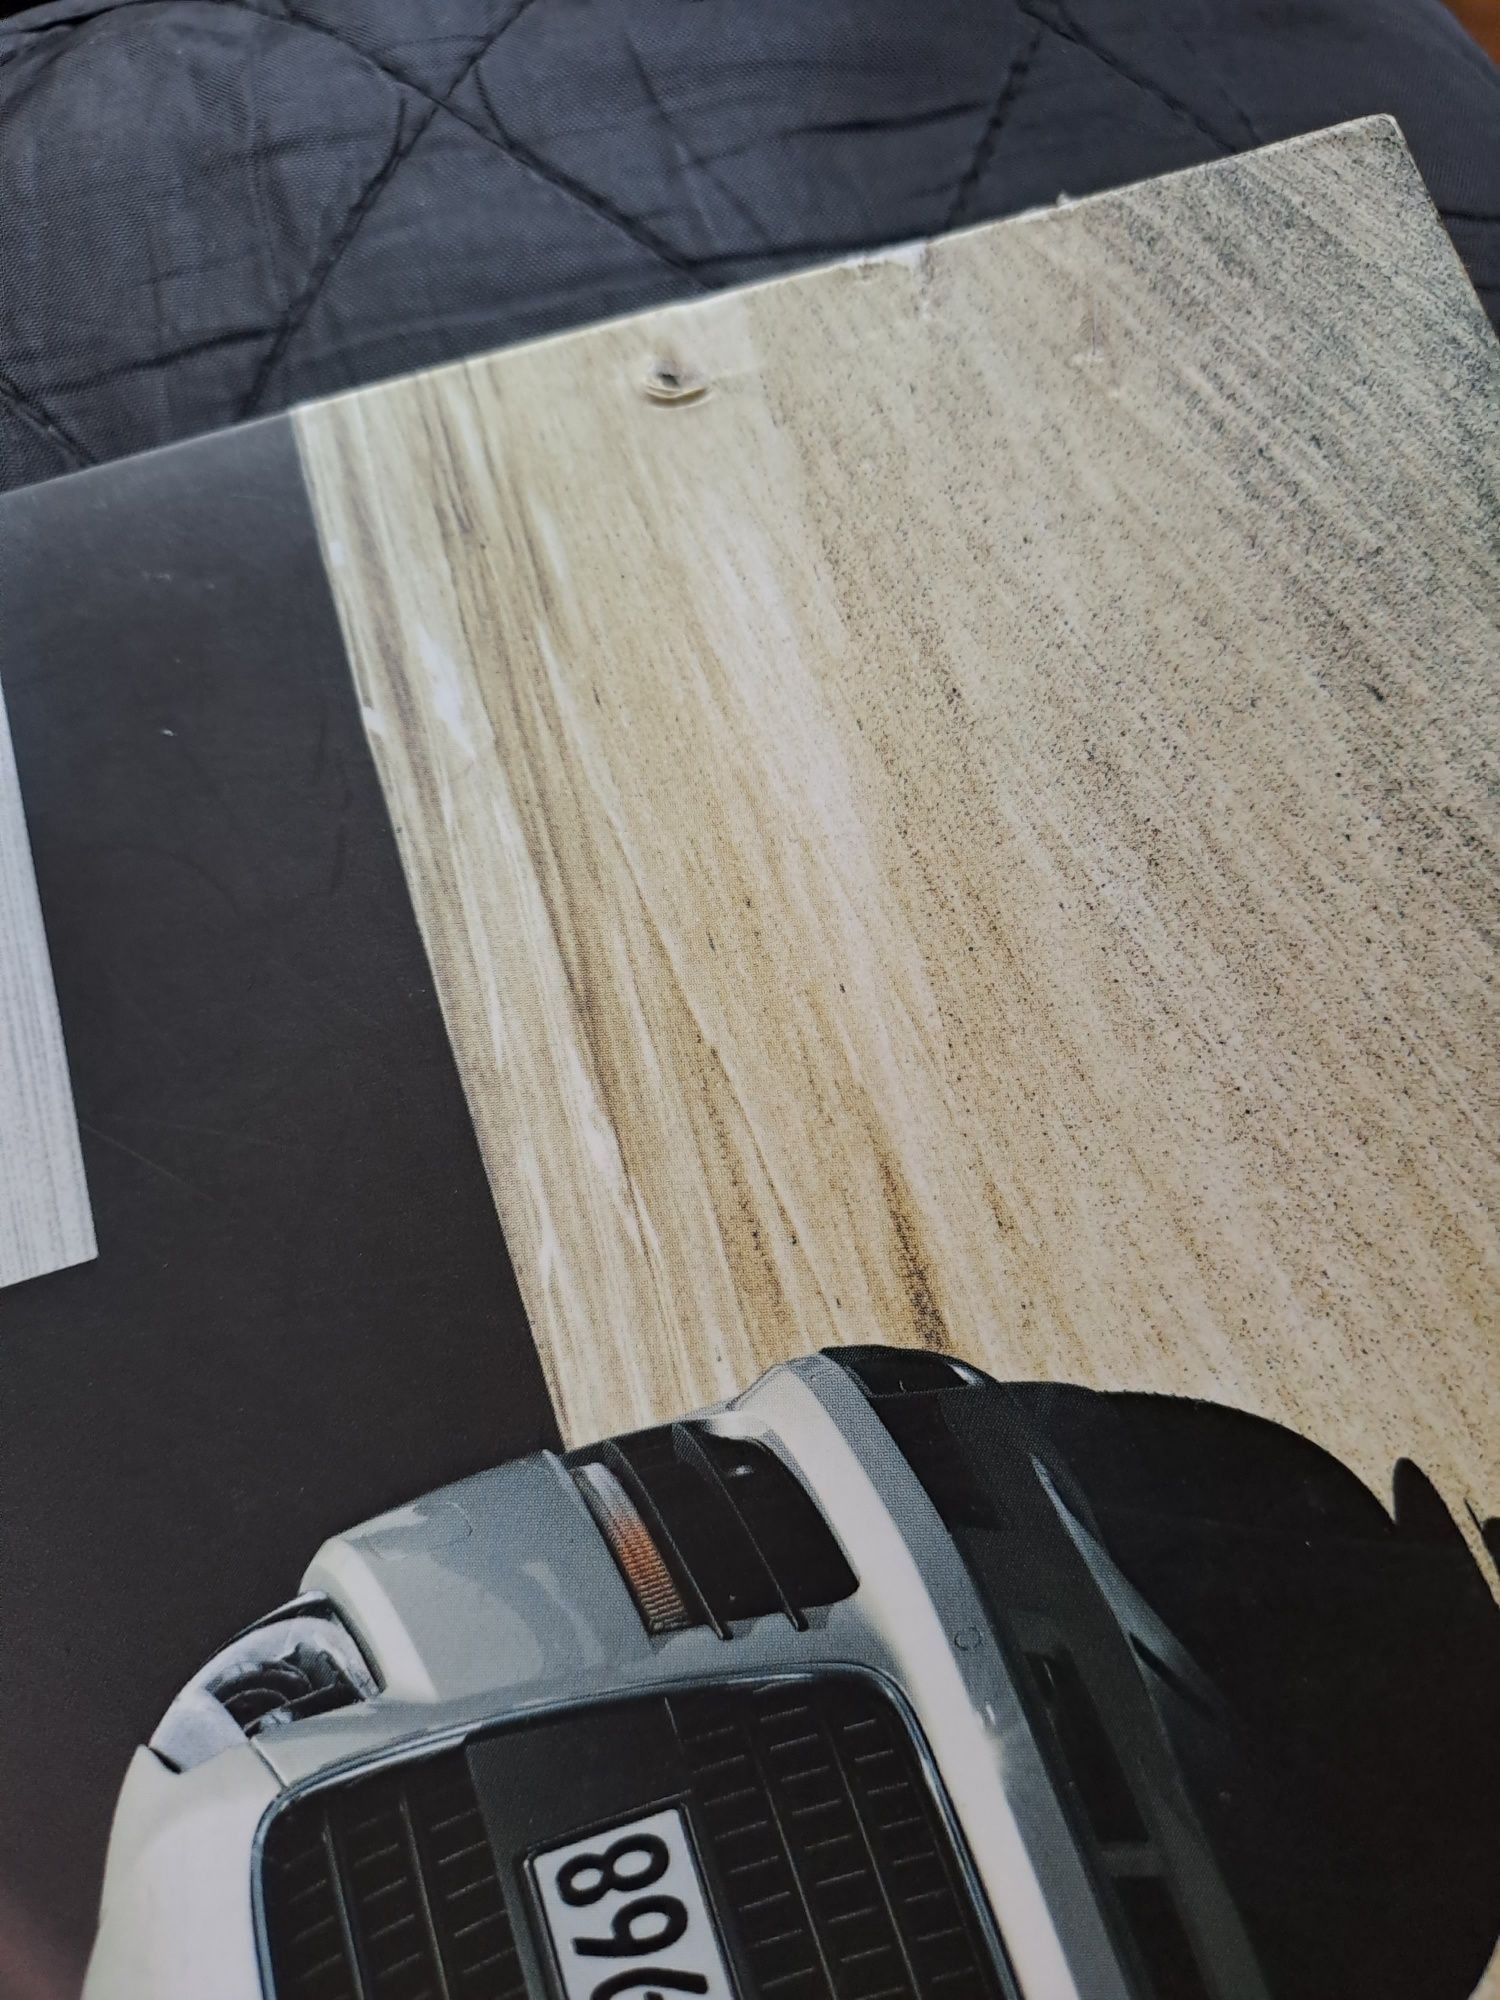 Katalog samochodu Audi Q7 niemiecki